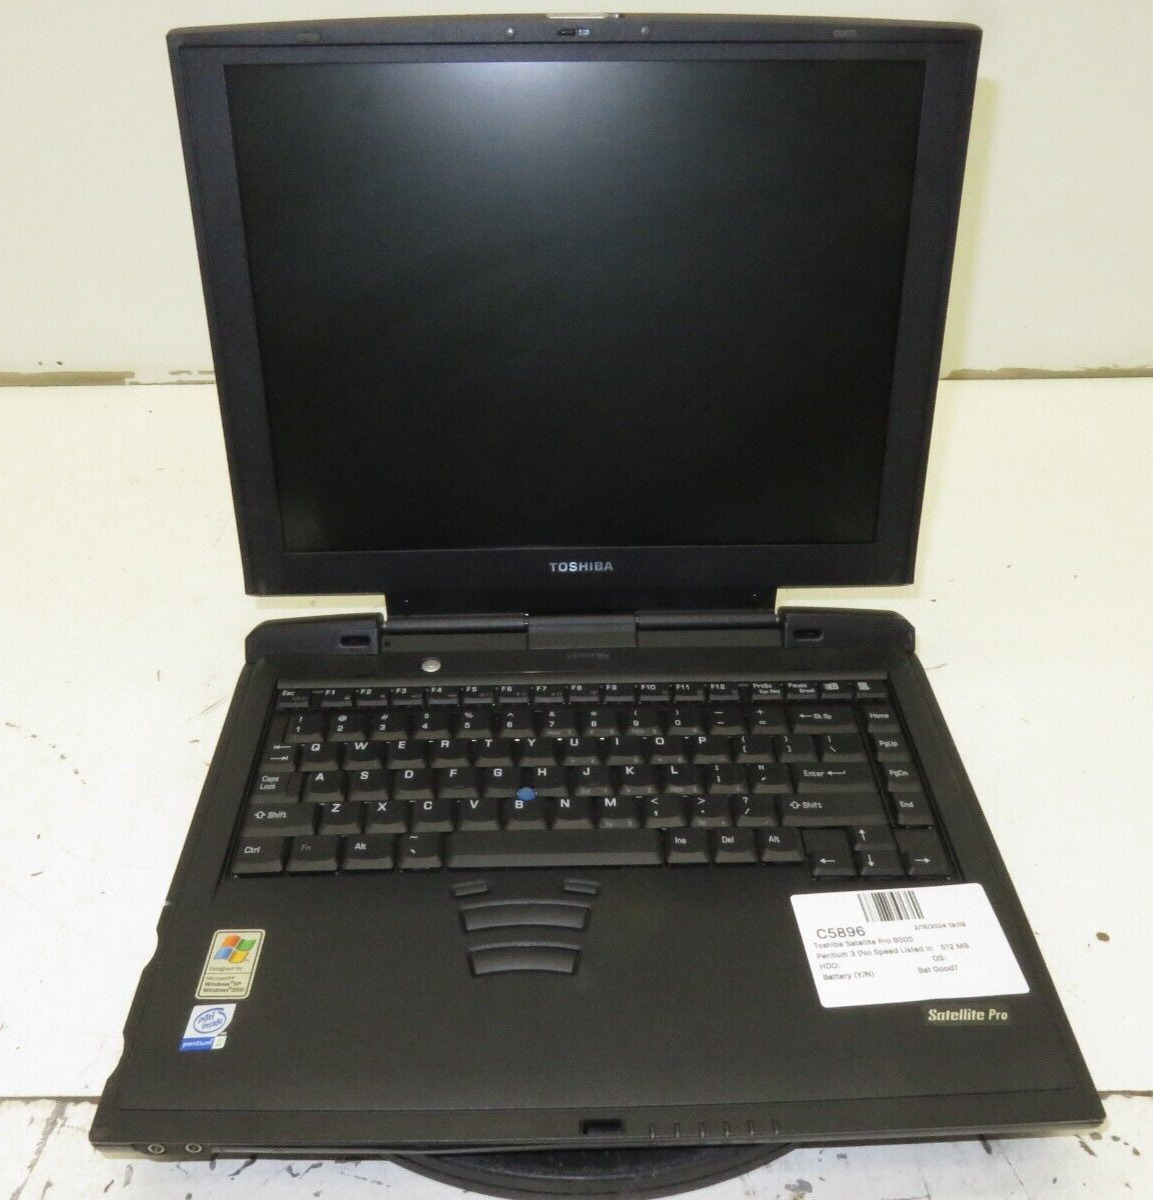 Toshiba Satellite Pro 6000 PS600u Laptop Intel Pentium 3 PIII 512MB No HDD/Batt